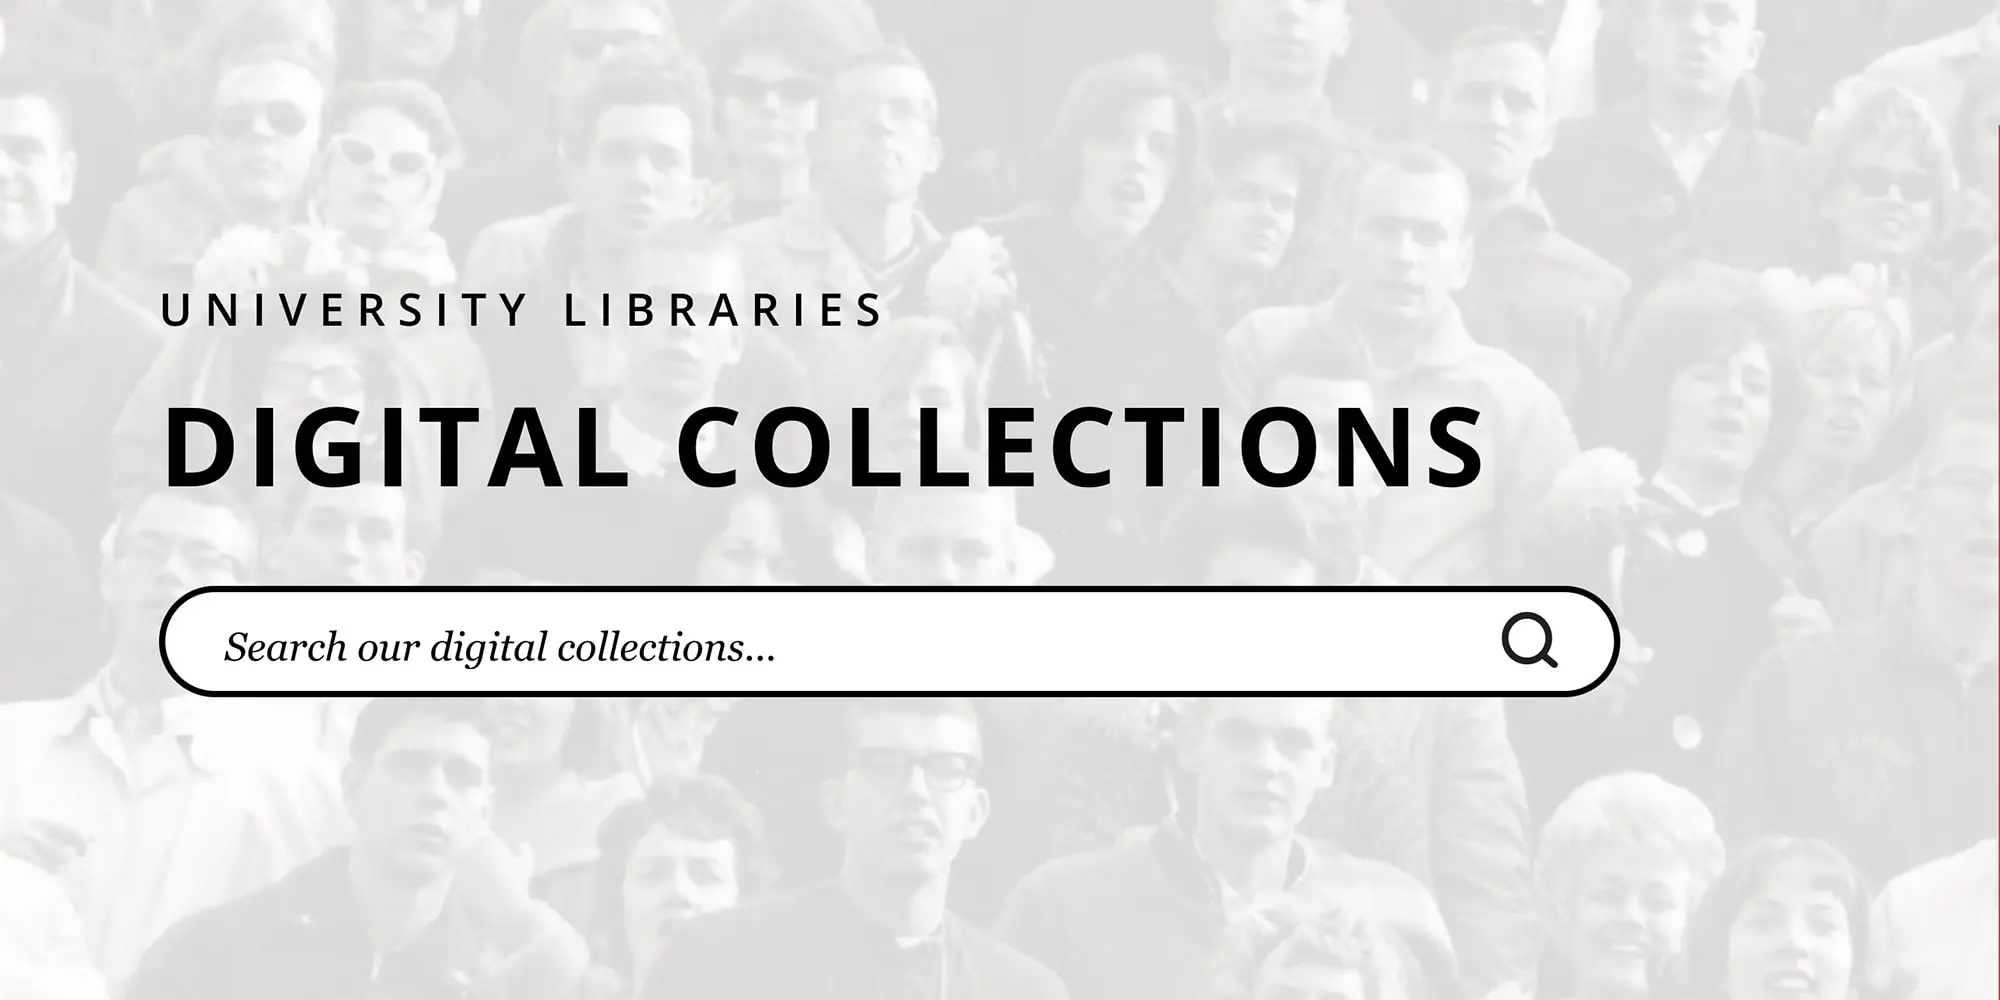 libraries-digital-collection-2000x1000-min.jpg